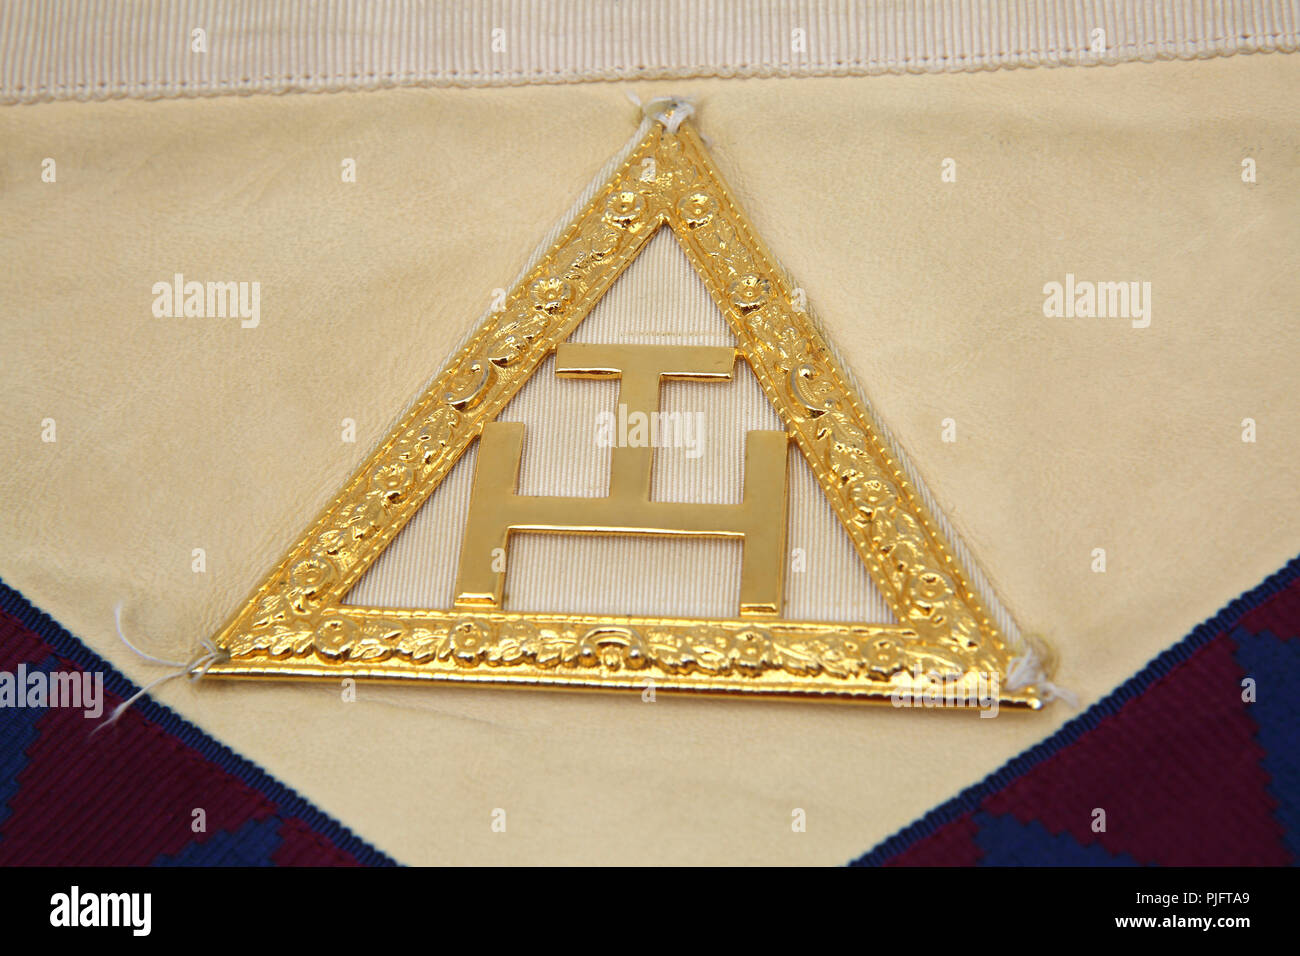 Masonic Royal Arch Companion Lambskin Apron with Triple Tau Emblem Stock Photo